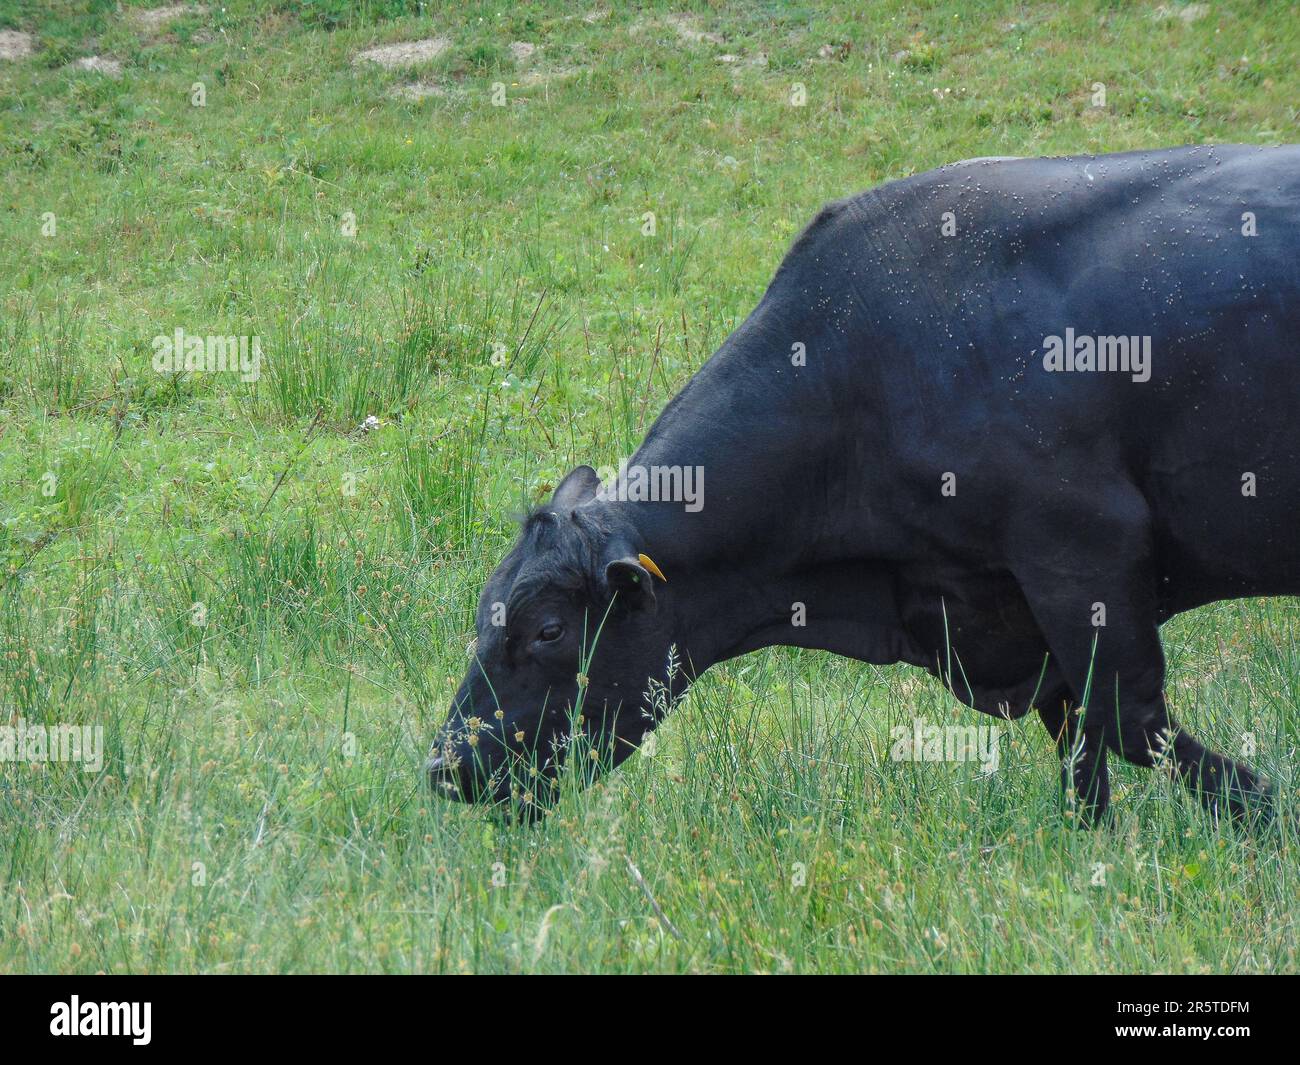 A black angus bull grazes grass Stock Photo